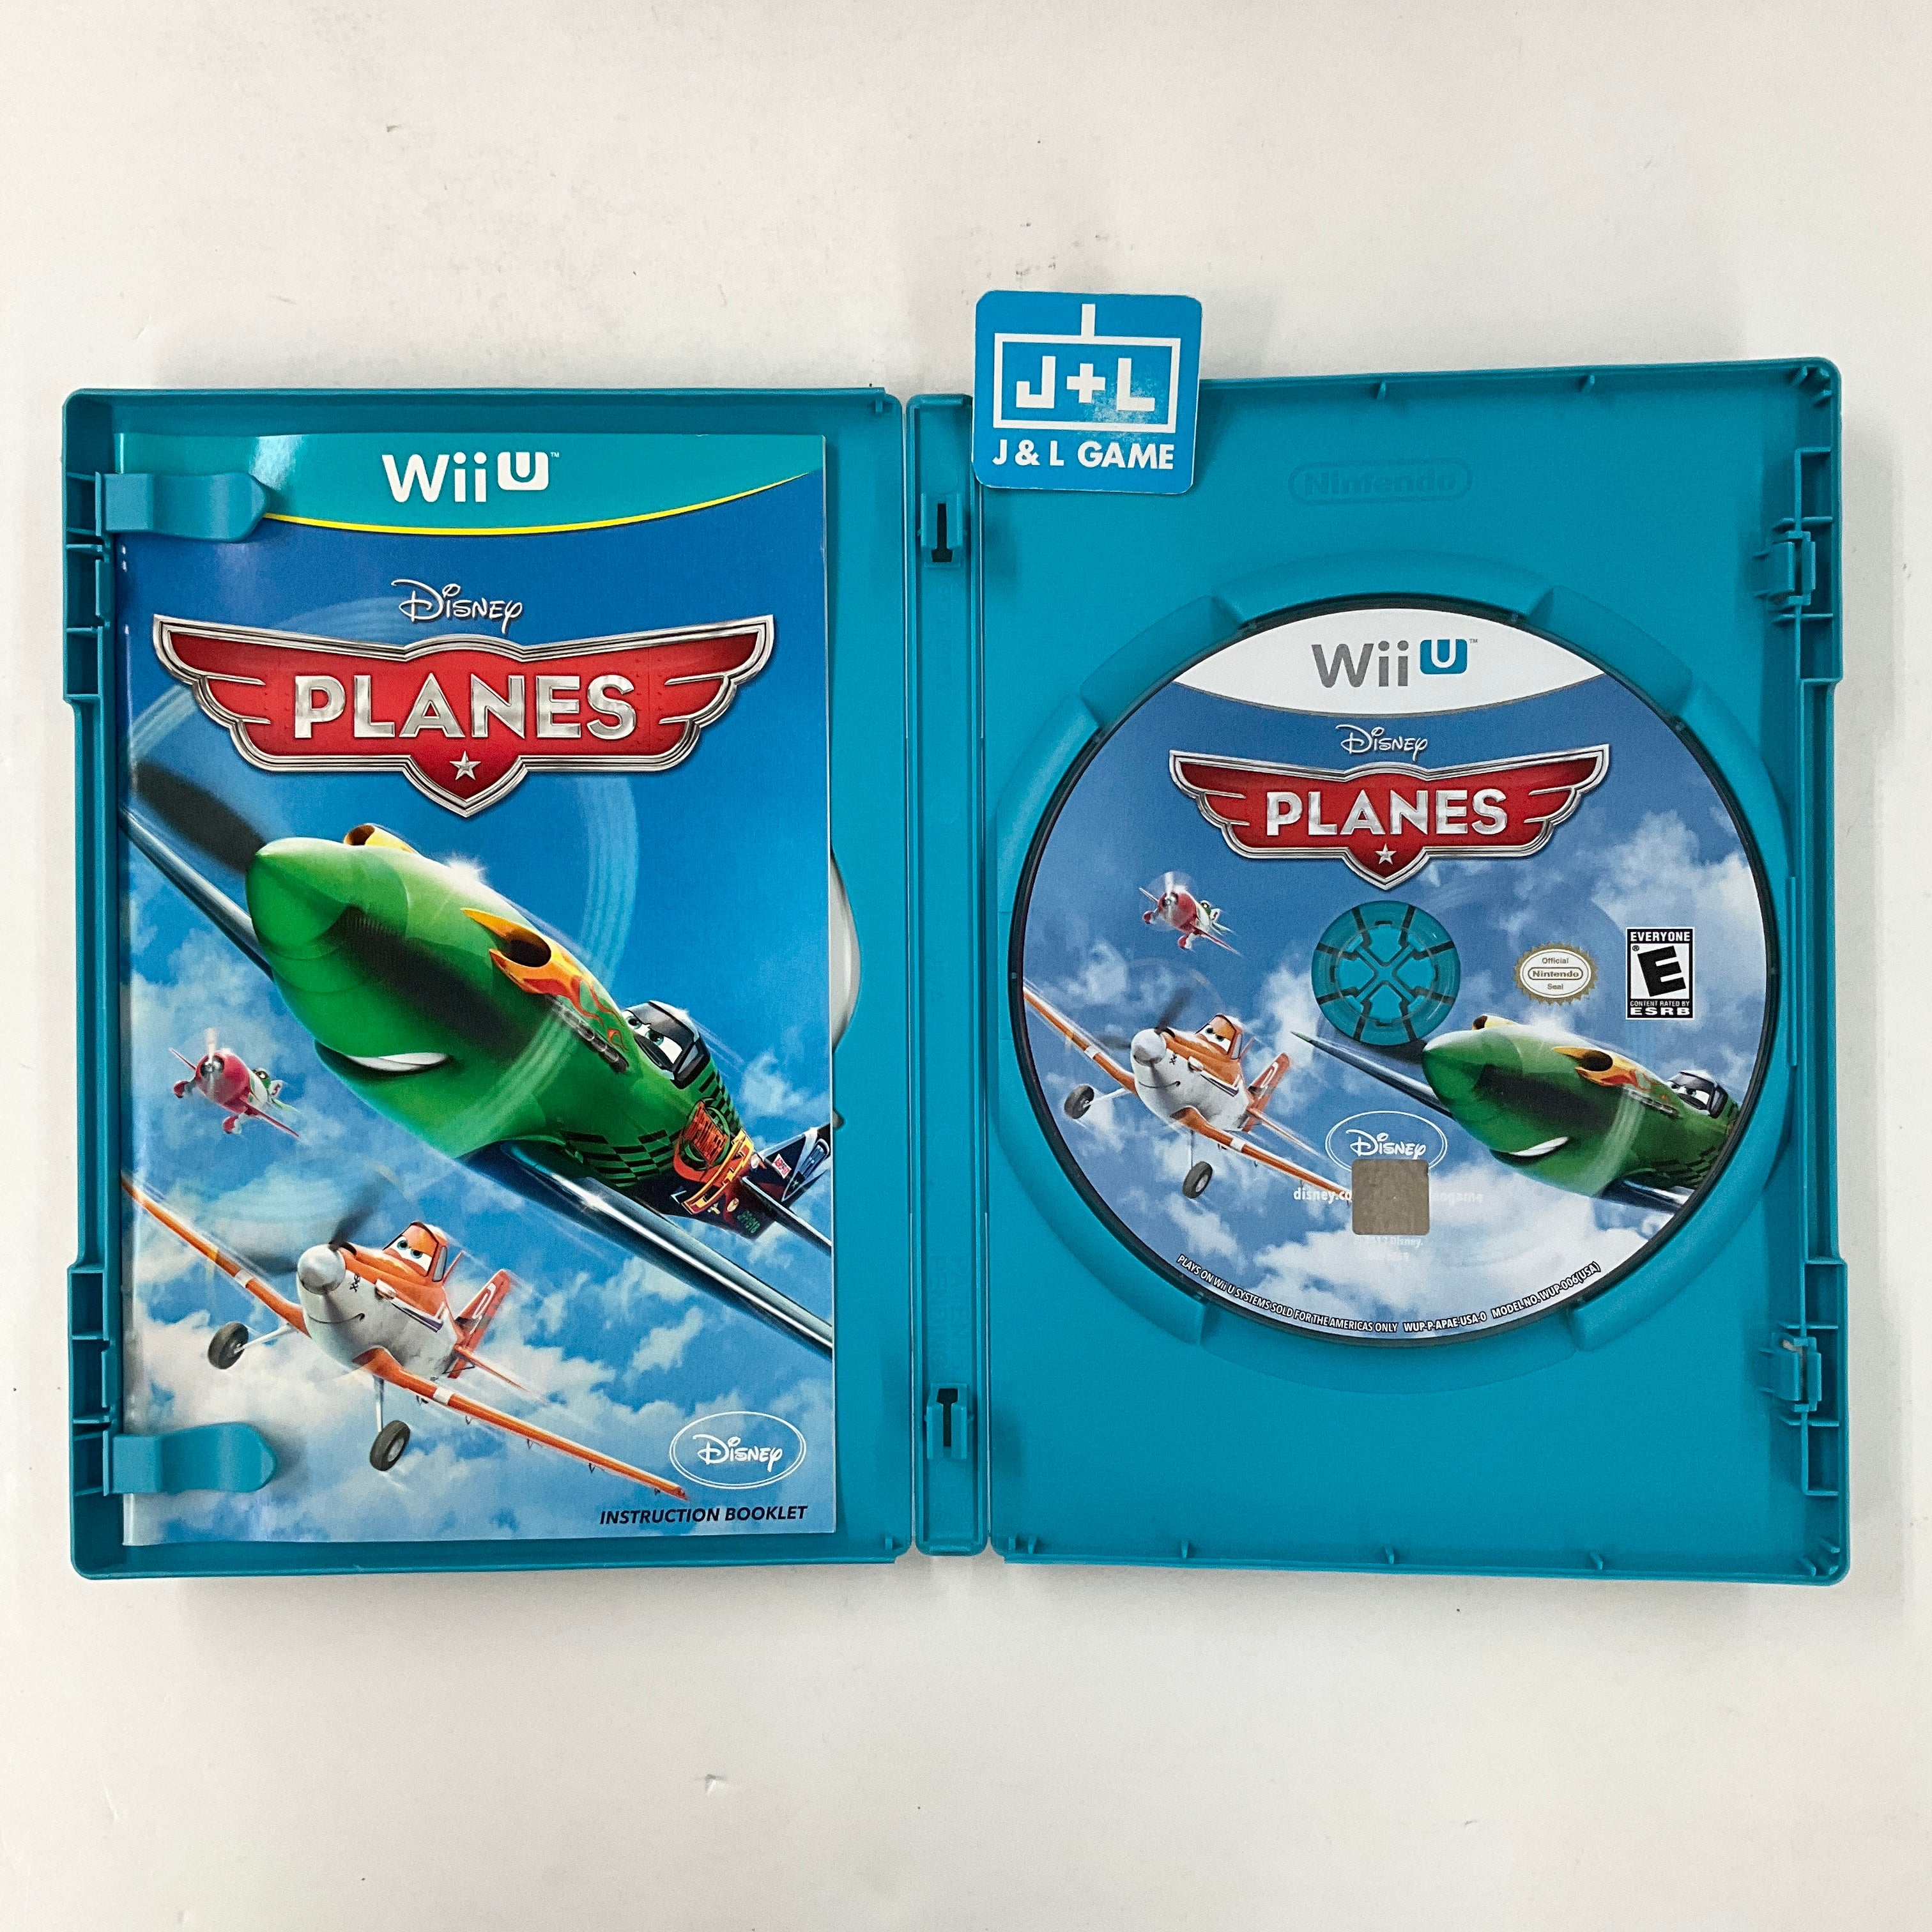 Disney's Planes - Nintendo Wii U [Pre-Owned] Video Games Disney Interactive Studios   